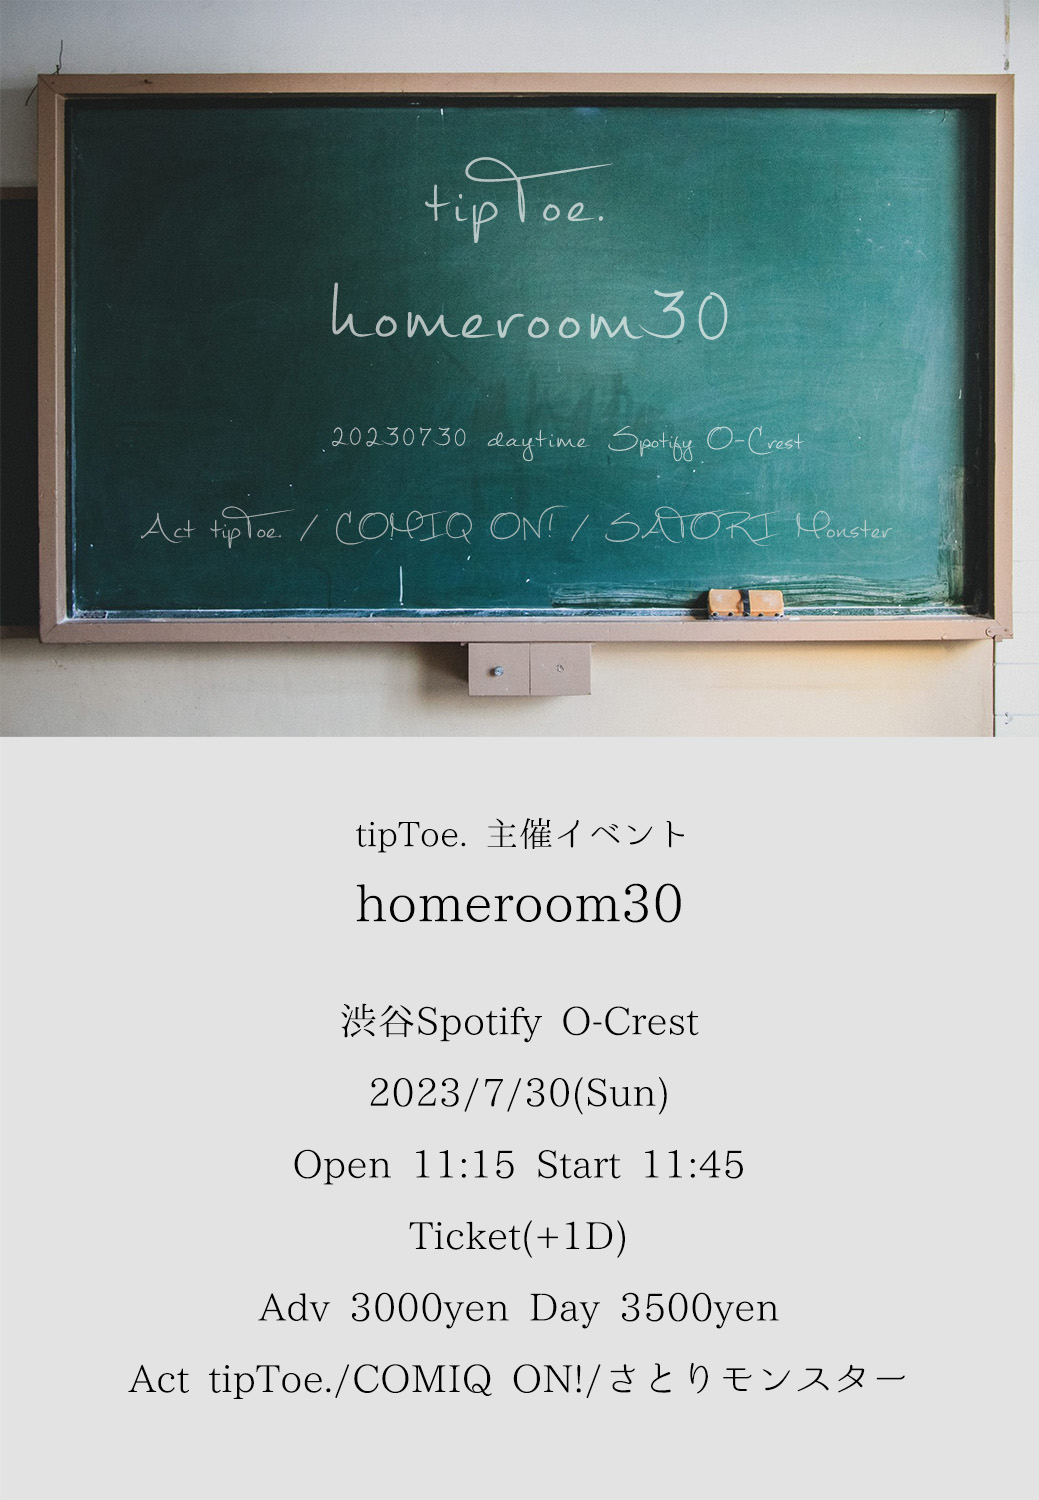 tipToe.主催イベント「homeroom30」